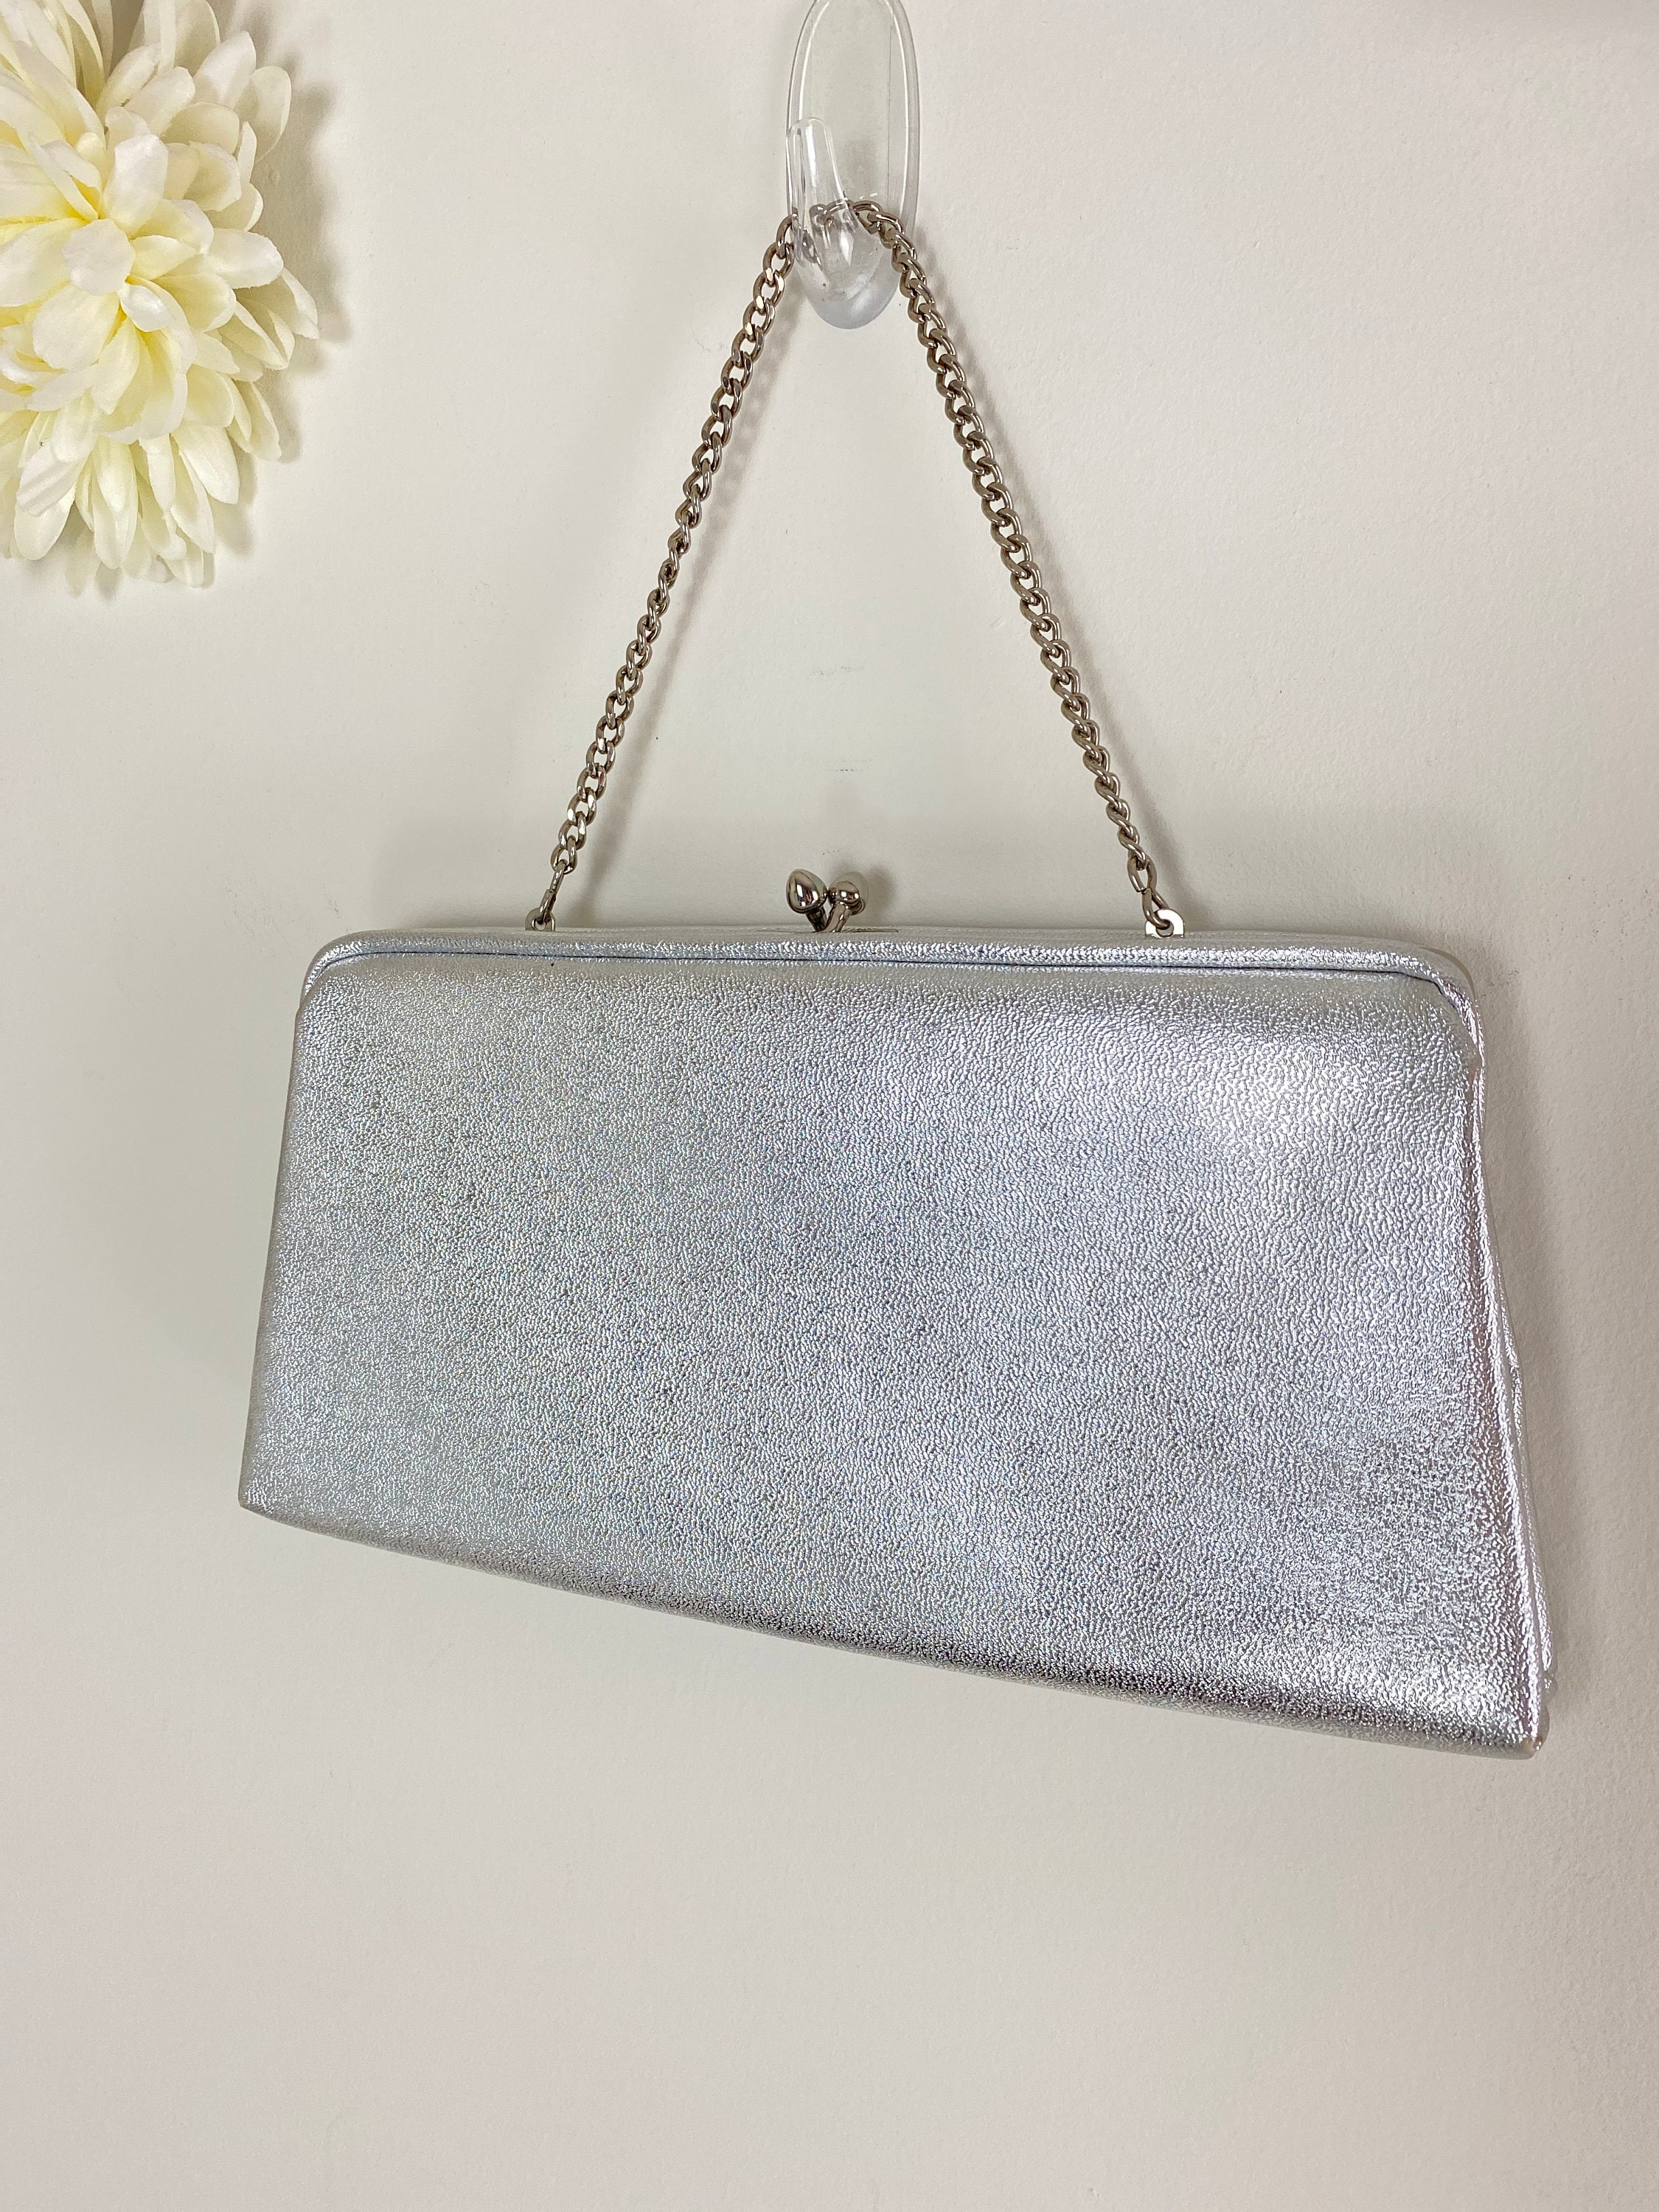 Vintage 1960s Silver Glitter Clutch - Etsy